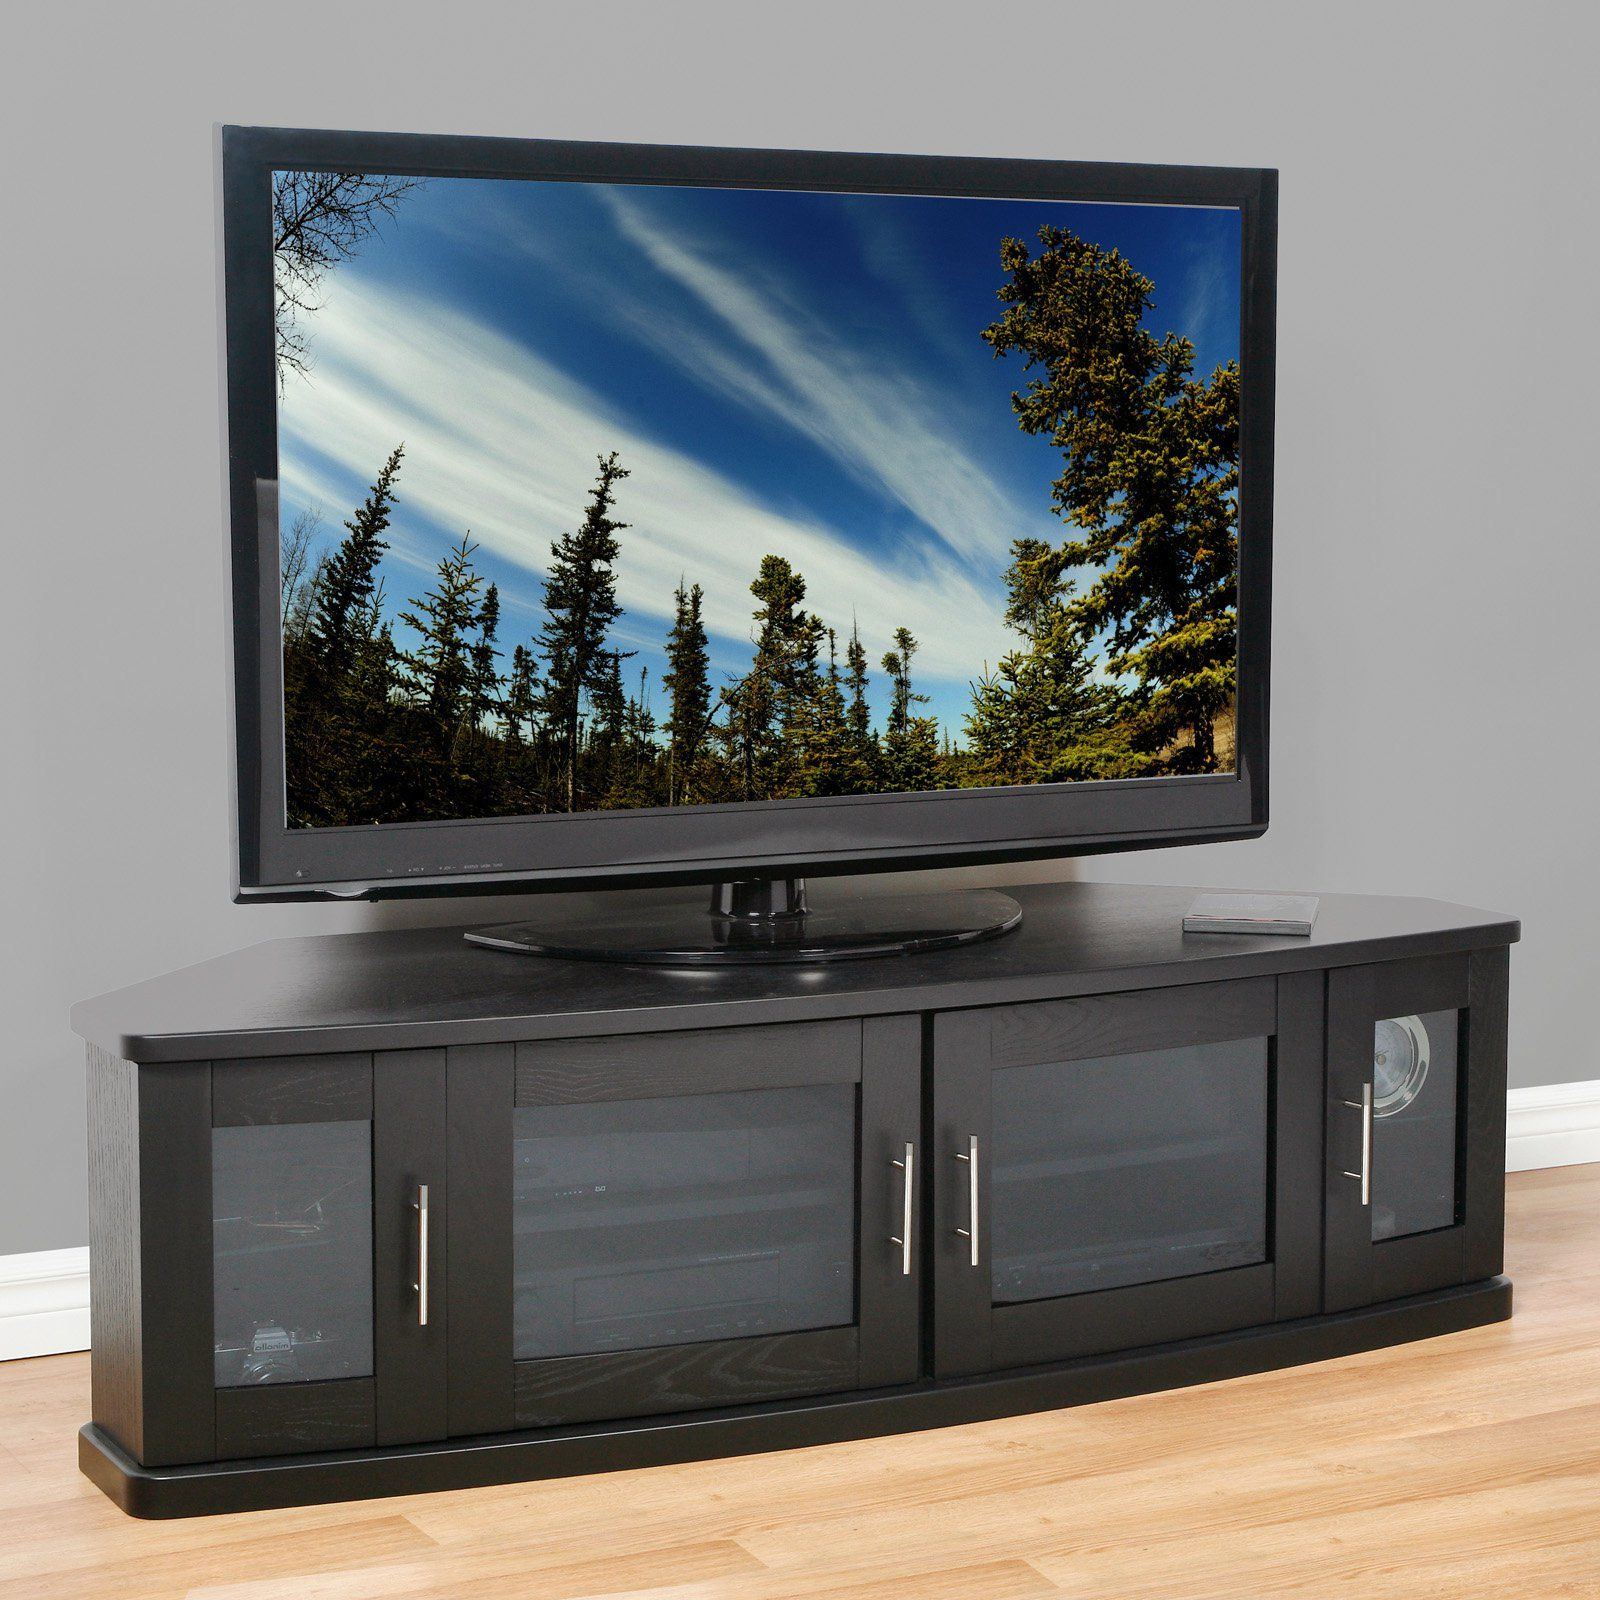 Most Recent Plateau Newport 62 Inch Corner Tv Stand In Black – Walmart Inside 55 Inch Corner Tv Stands (View 5 of 20)